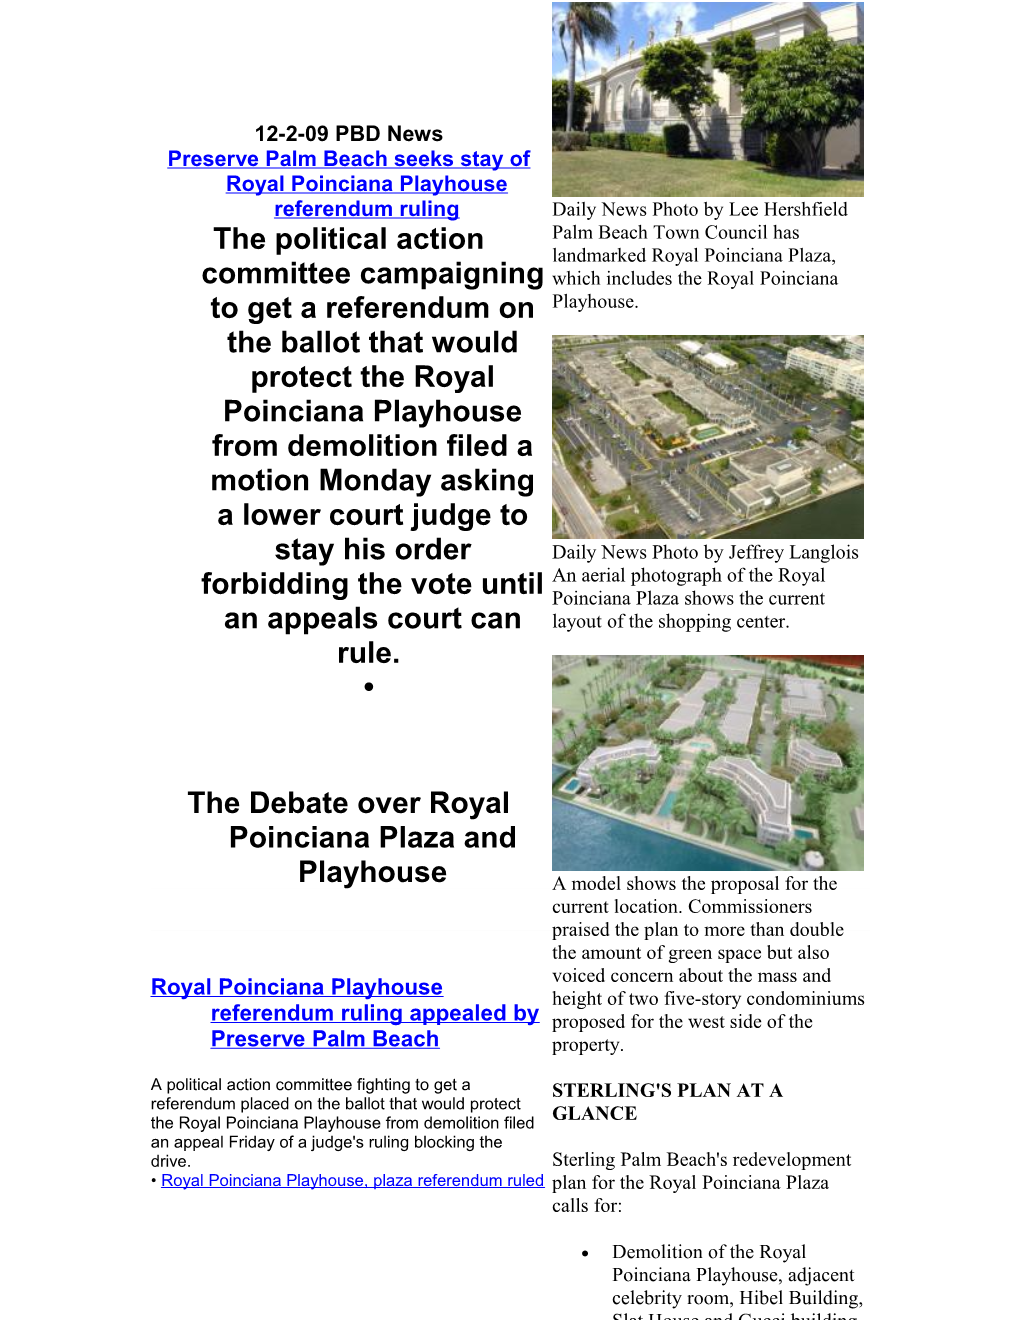 Preserve Palm Beach Seeks Stay of Royal Poinciana Playhouse Referendum Ruling